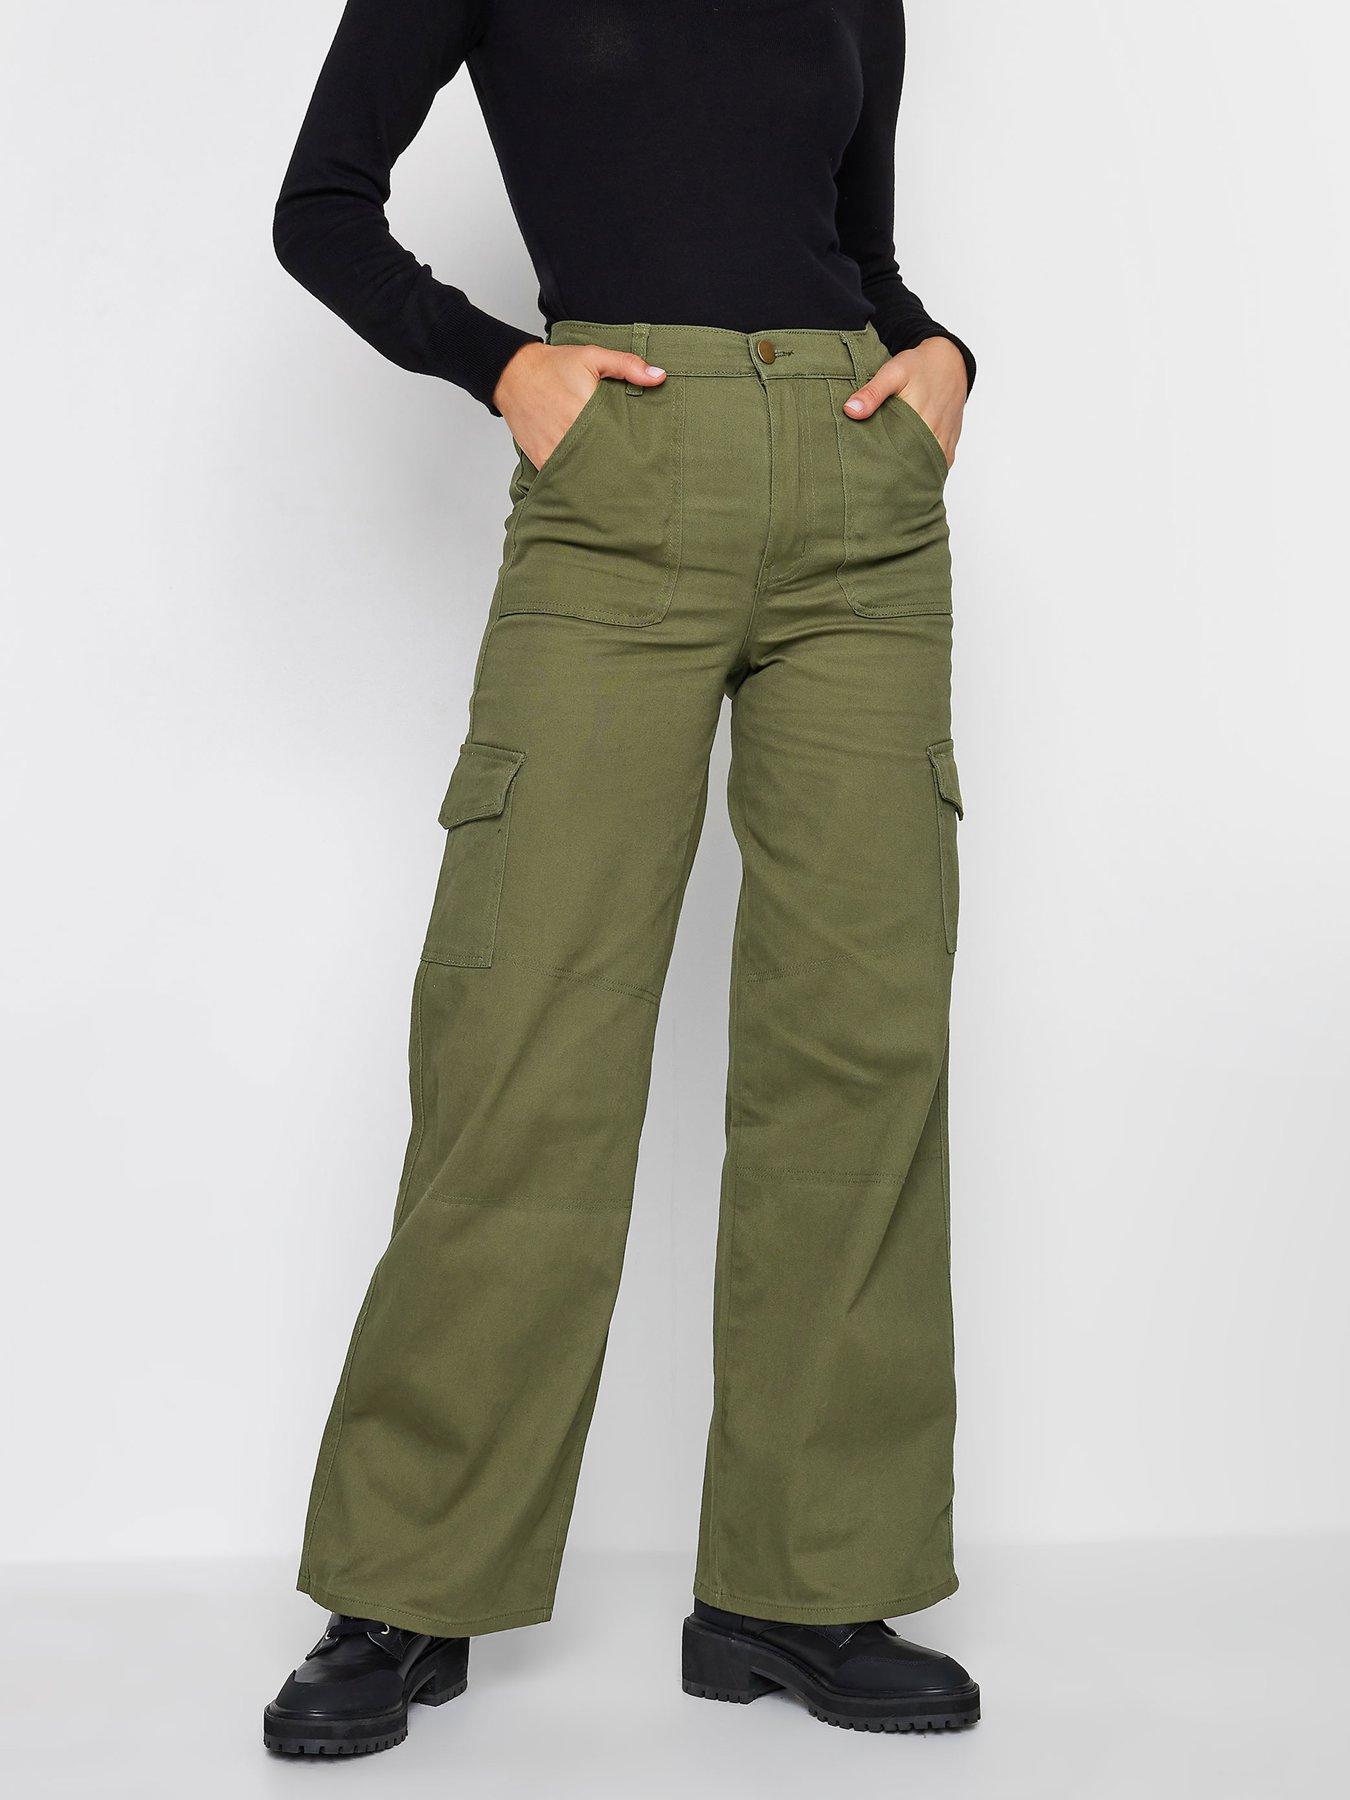 Juebong Mens Lightweight Cargo Trousers Relaxed Fit Multi-Pockets Big & Tall  Quick Dry Drawstring Work Pants,Beige,XXXL - Walmart.com